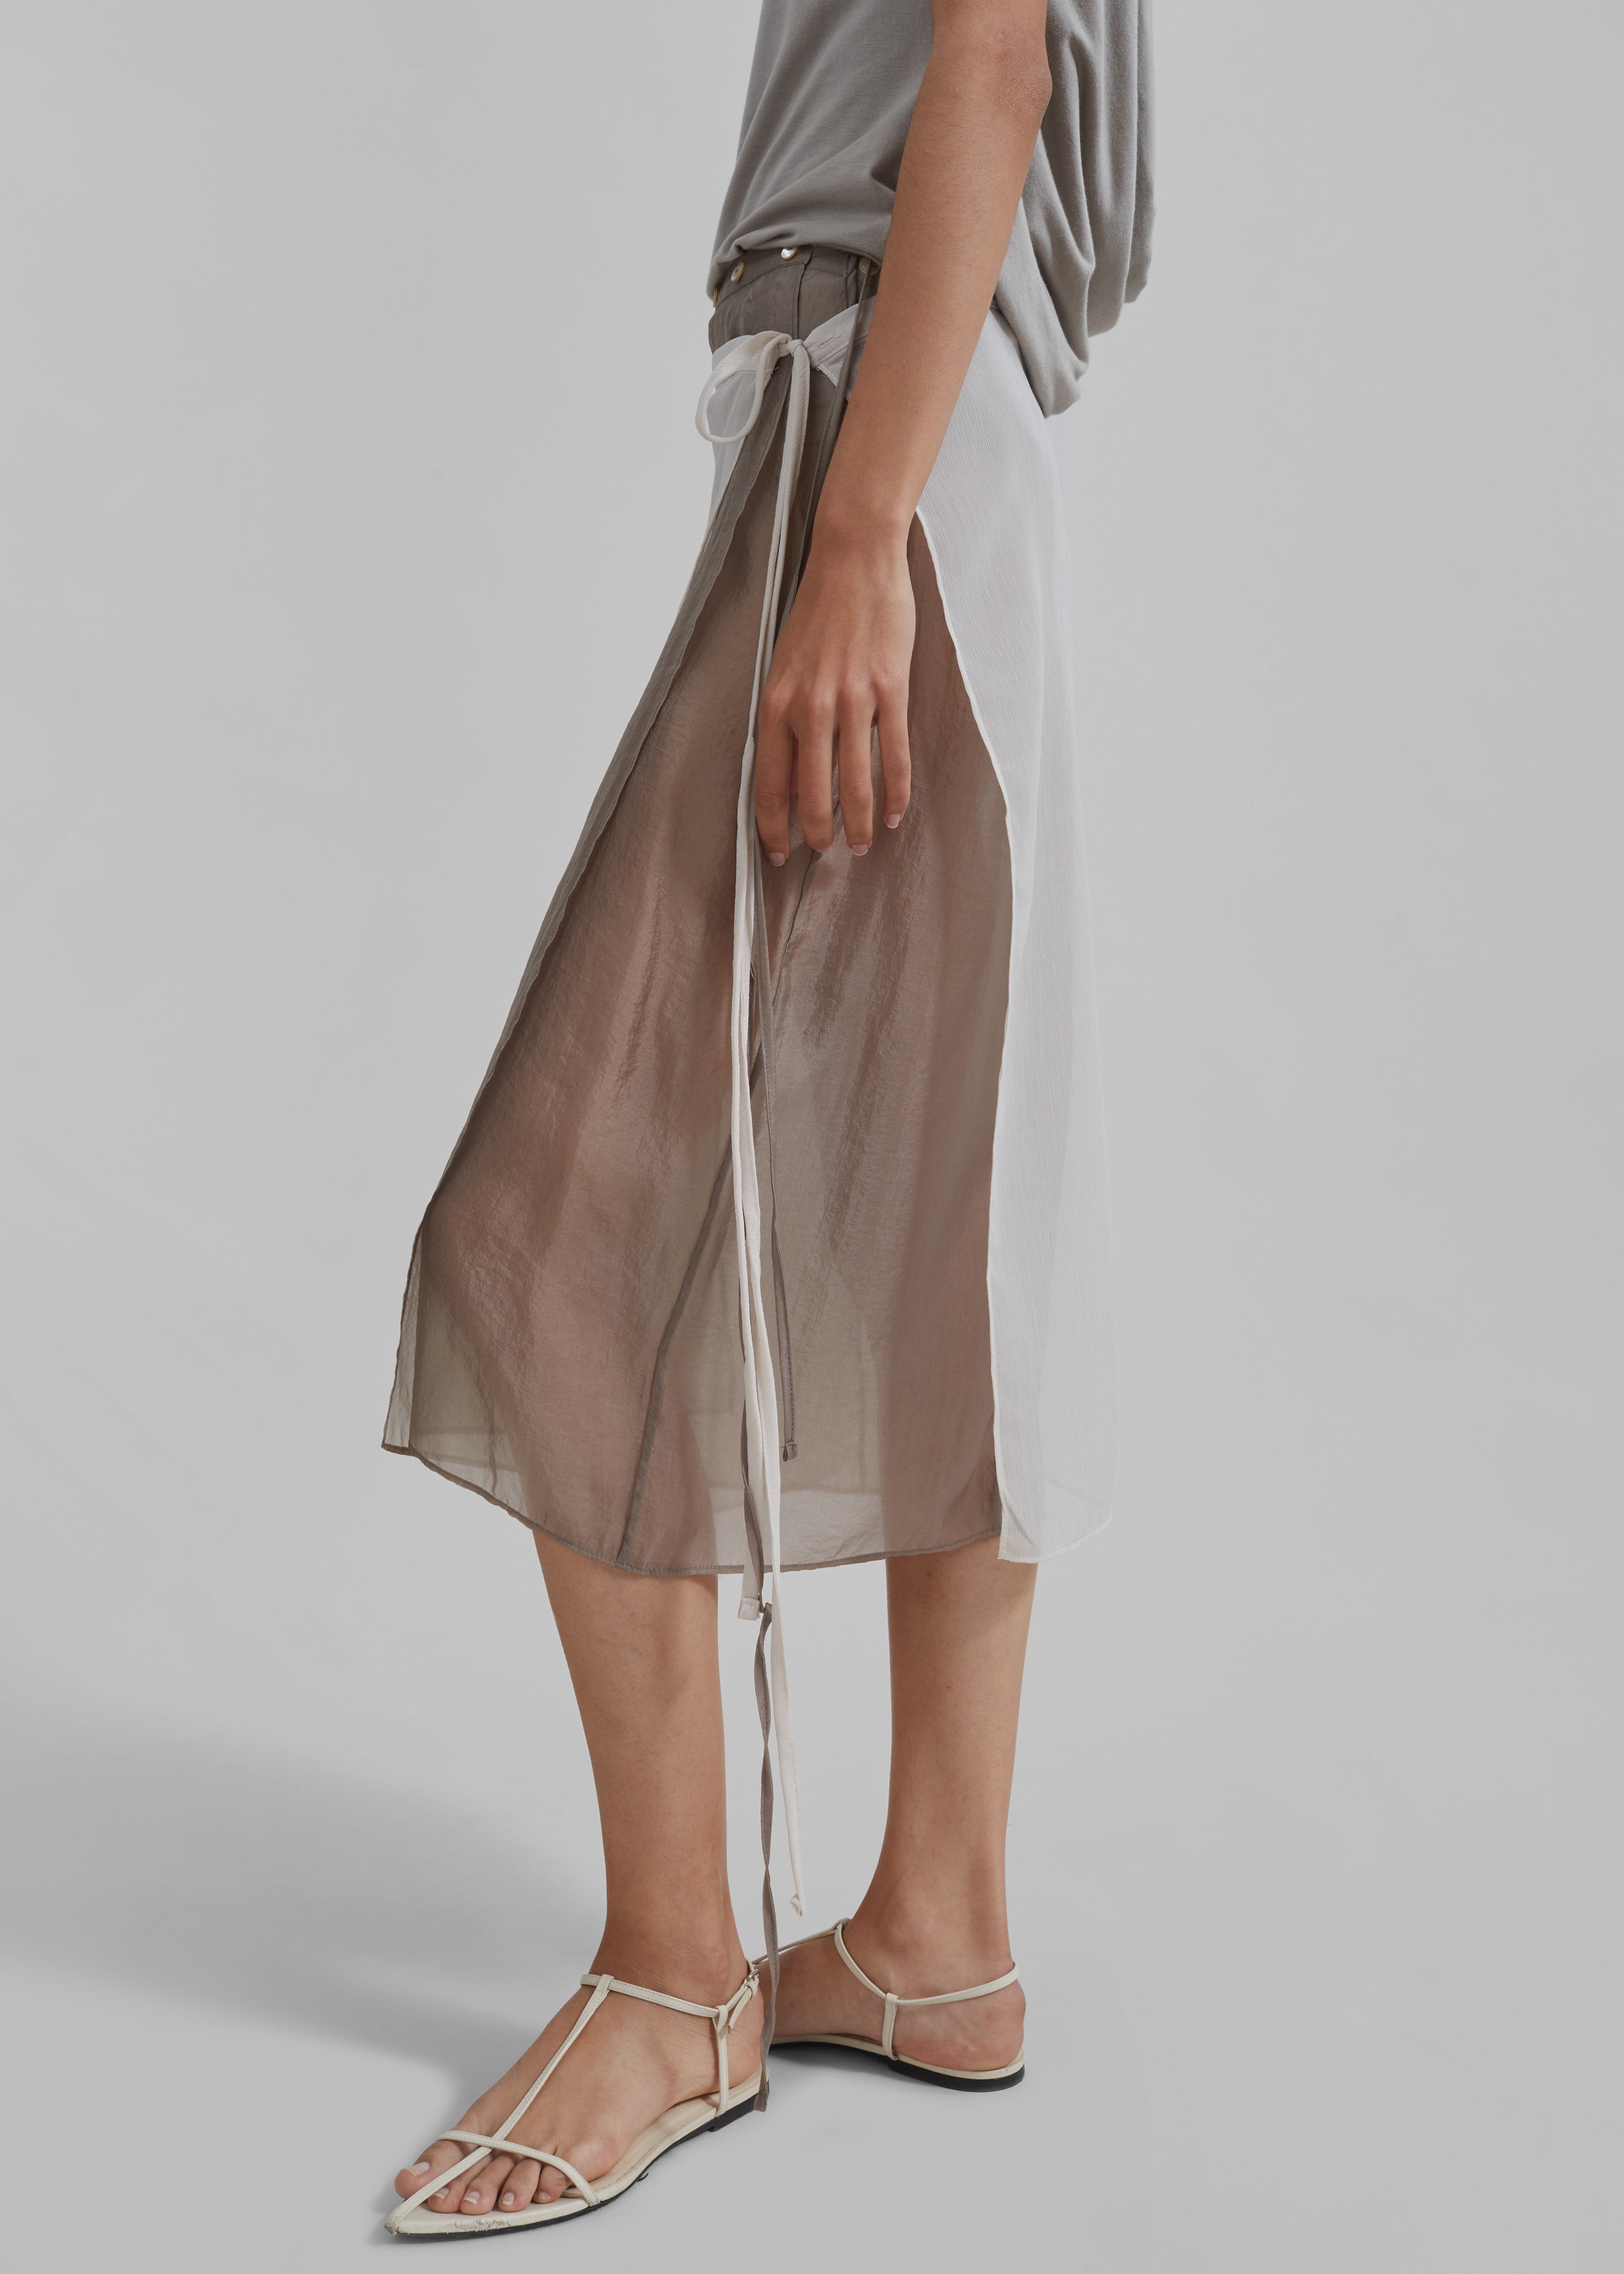 Tia Sheer Layered Skirt - Beige - 6